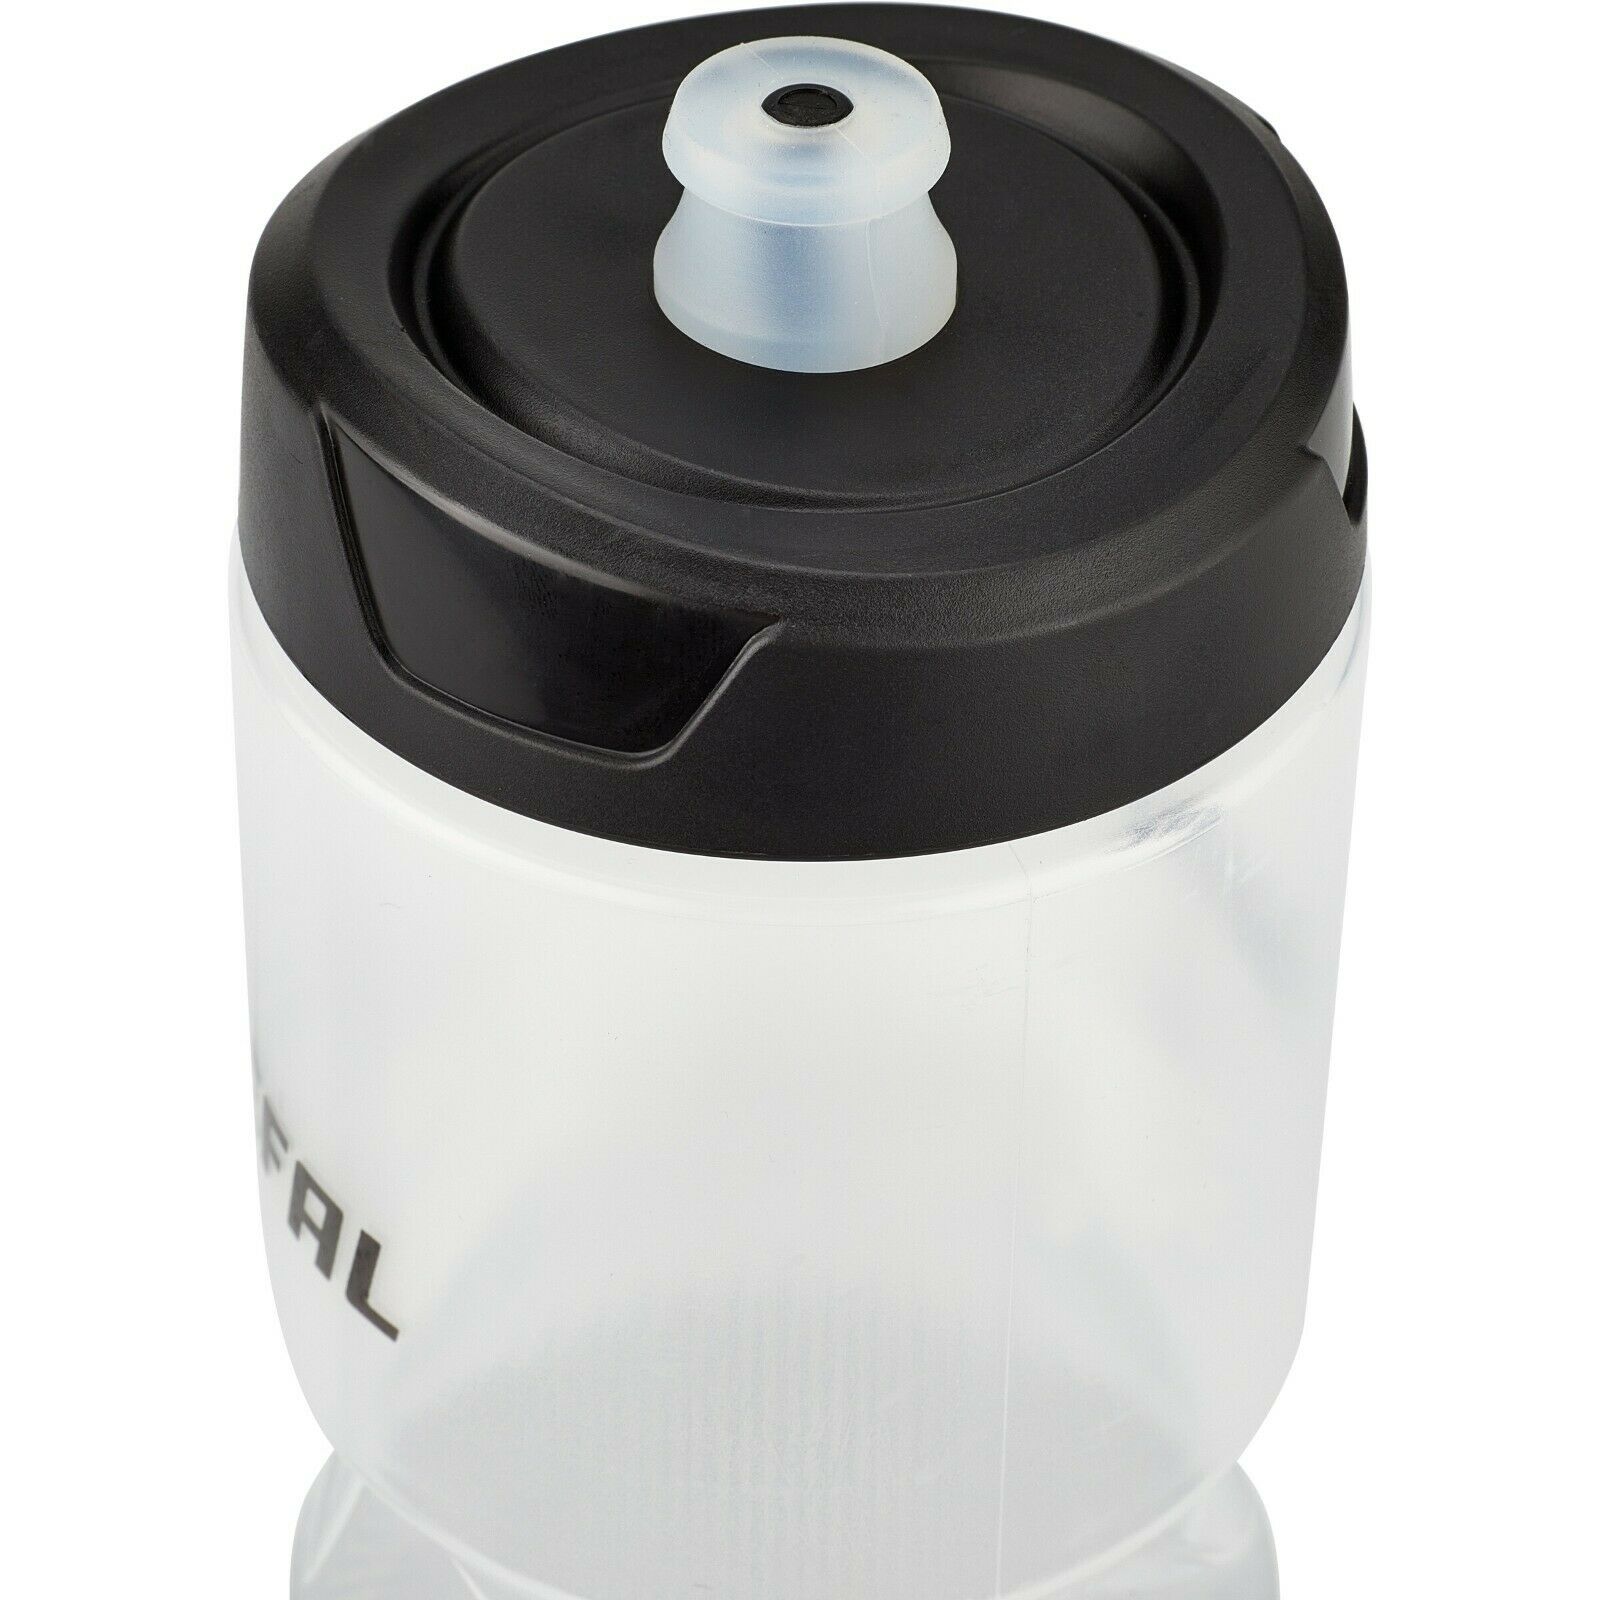 Zefal Magnum Pro Water Bottle - 975ML - Transparent - 2 Pack - Sportandleisure.com